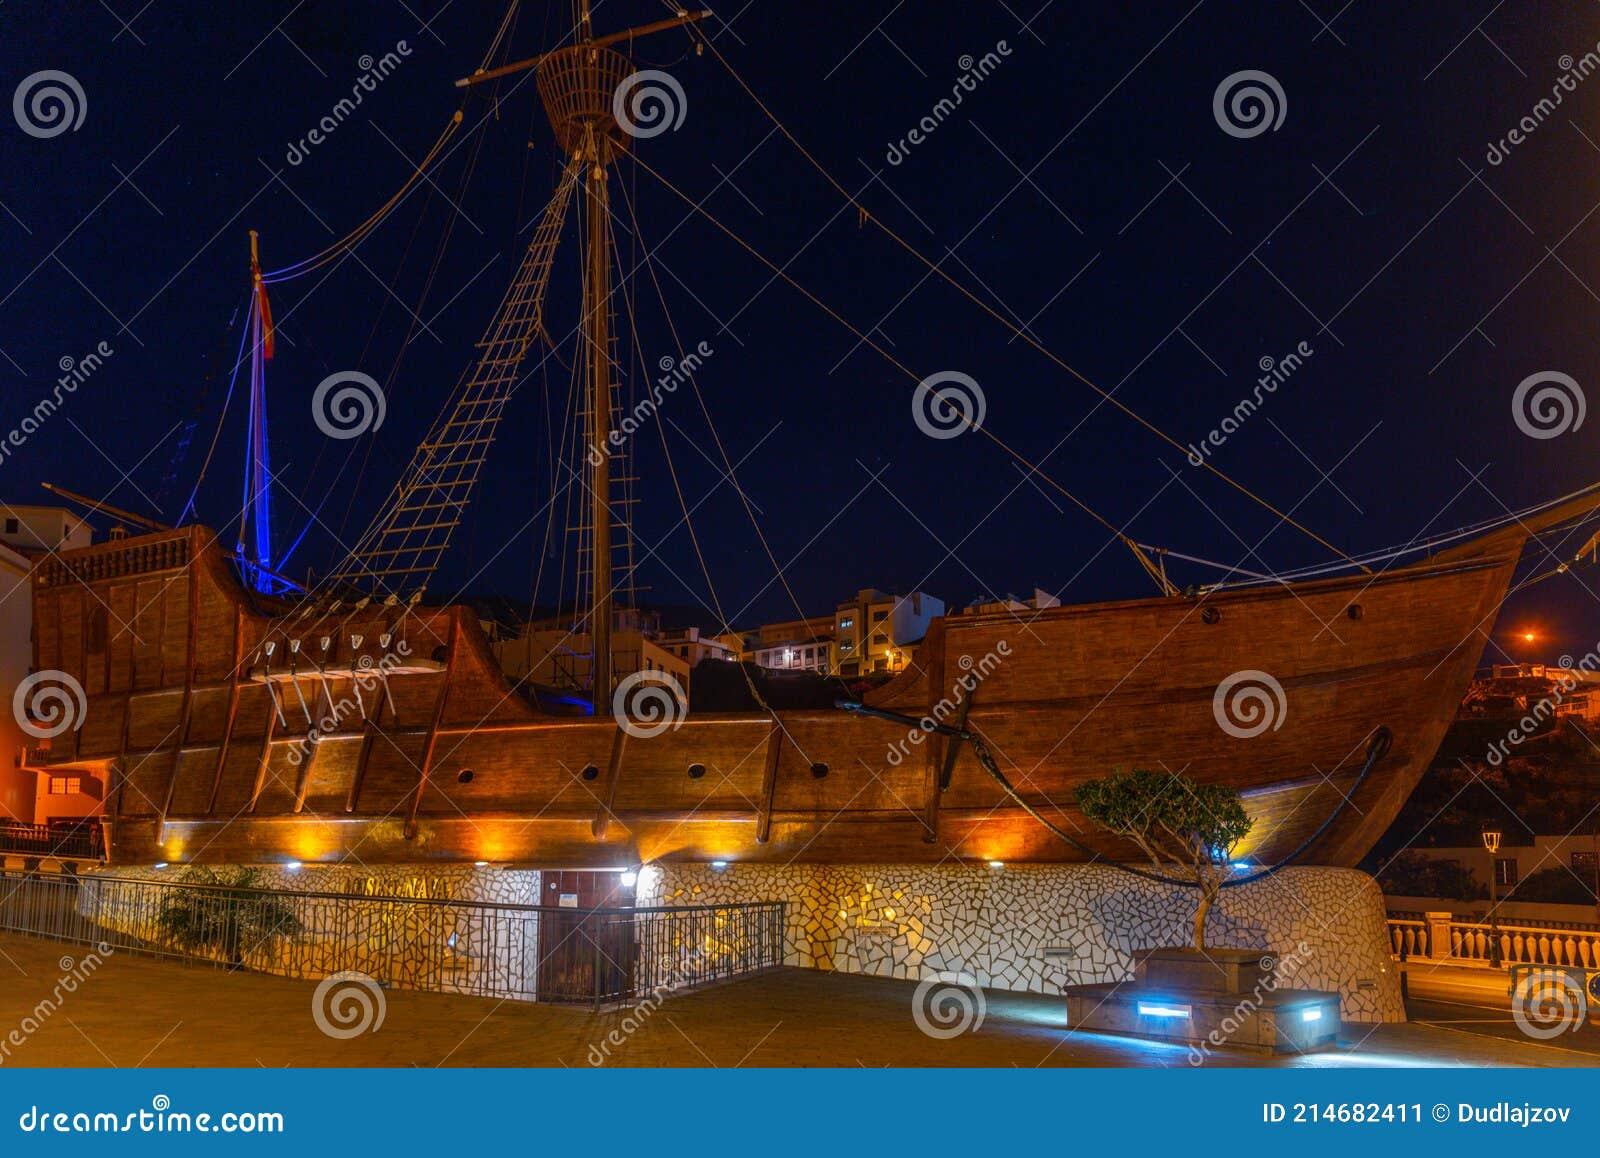 night view of the naval museum barco de la virgen at santa cruz de la palma, canary islands, spain